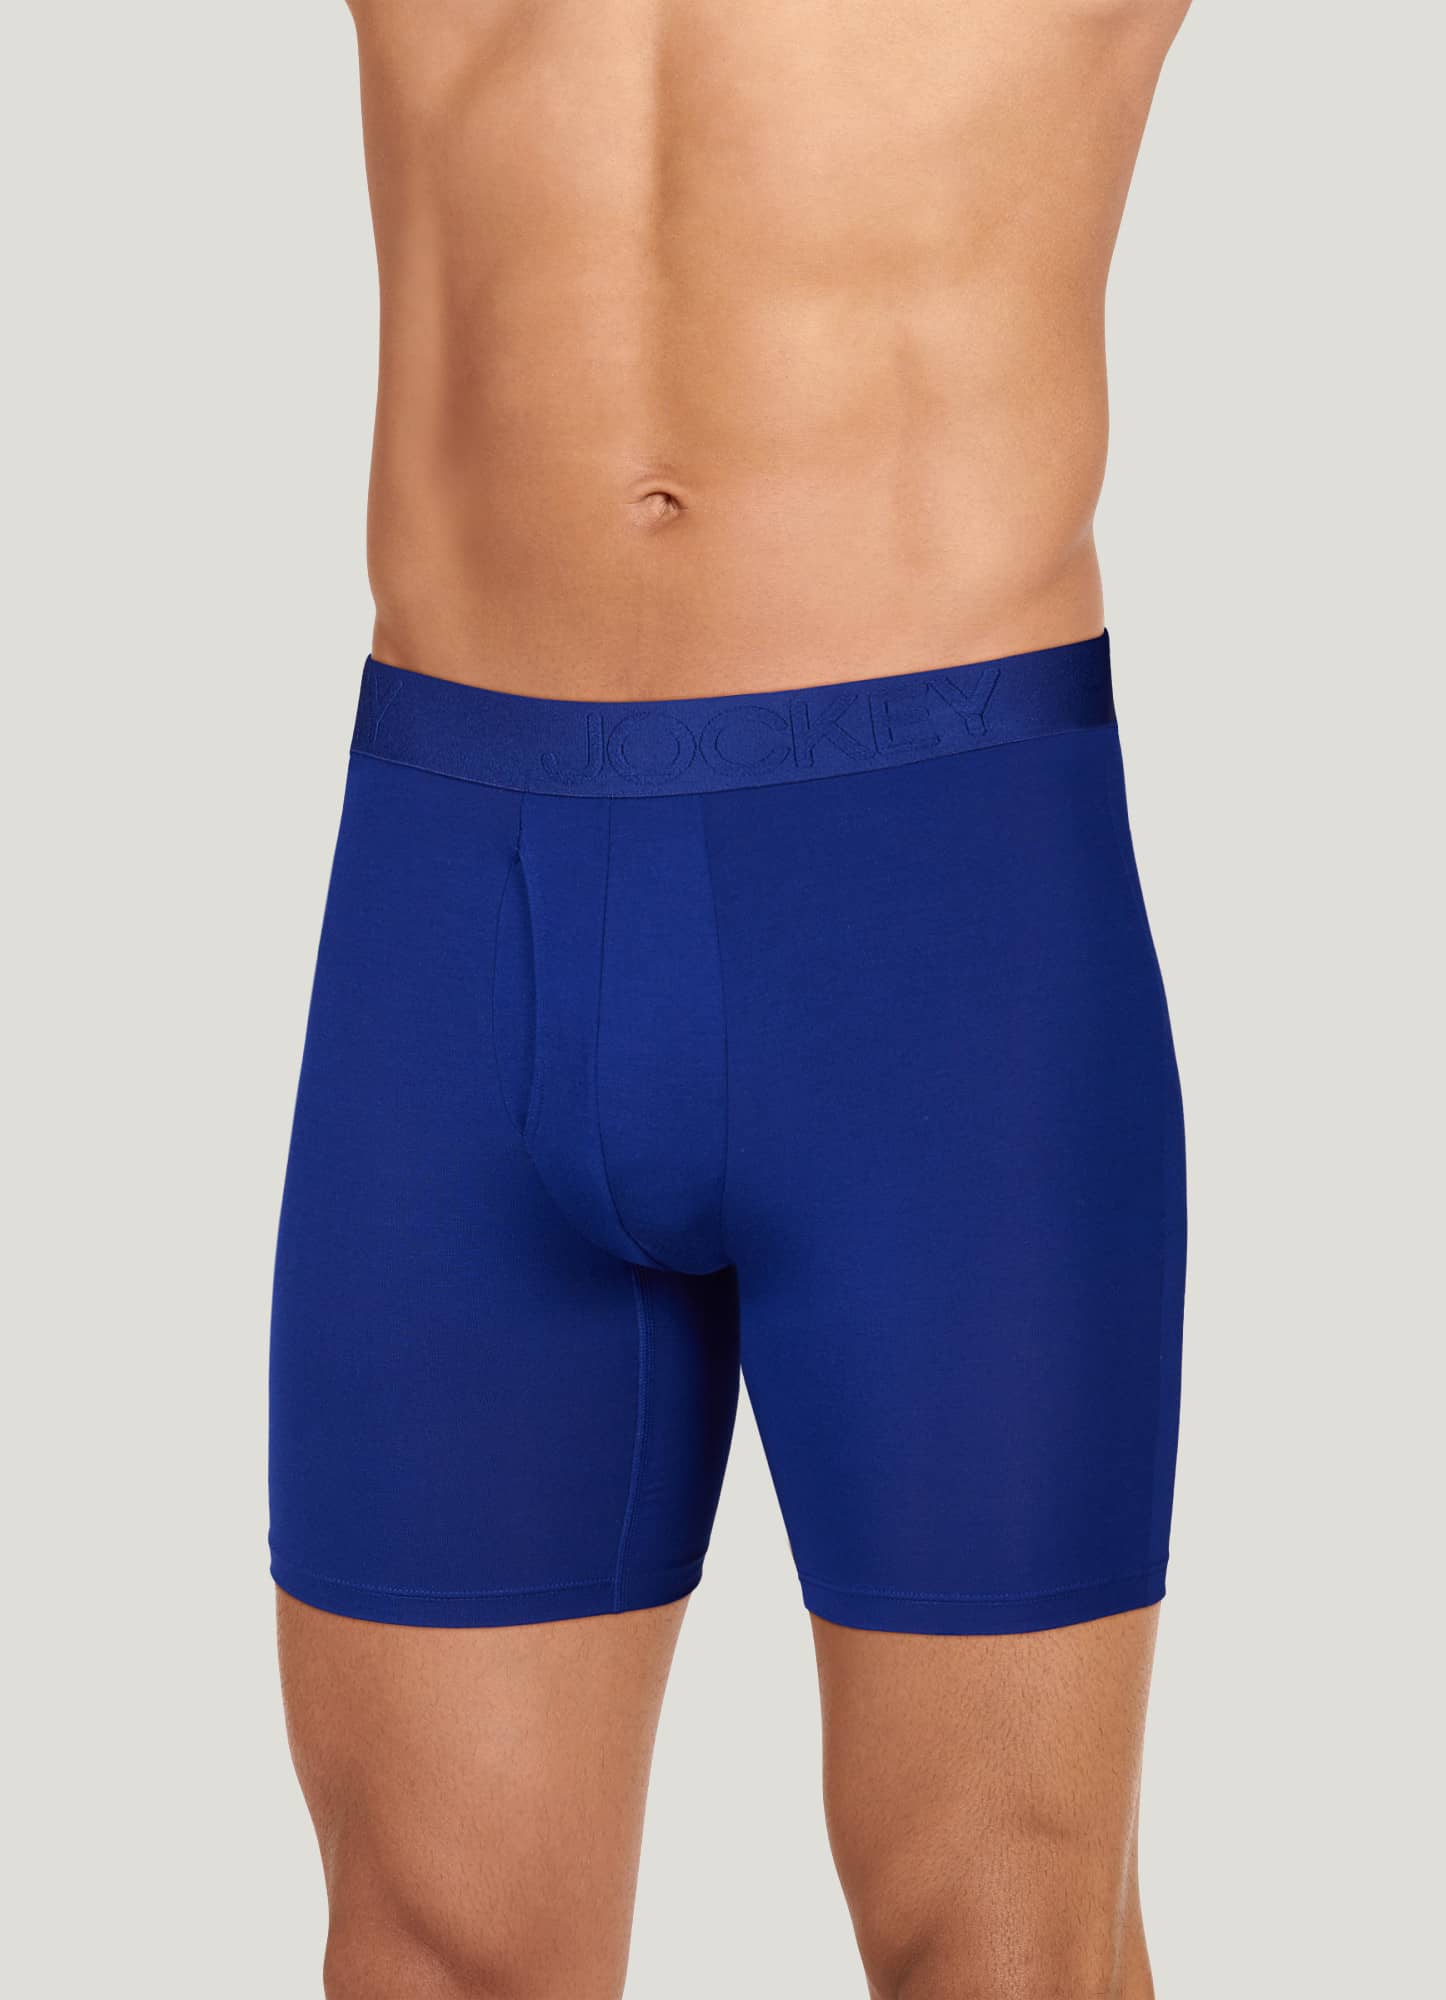 De Jagers - --Wide range of men's Jockey underwear available